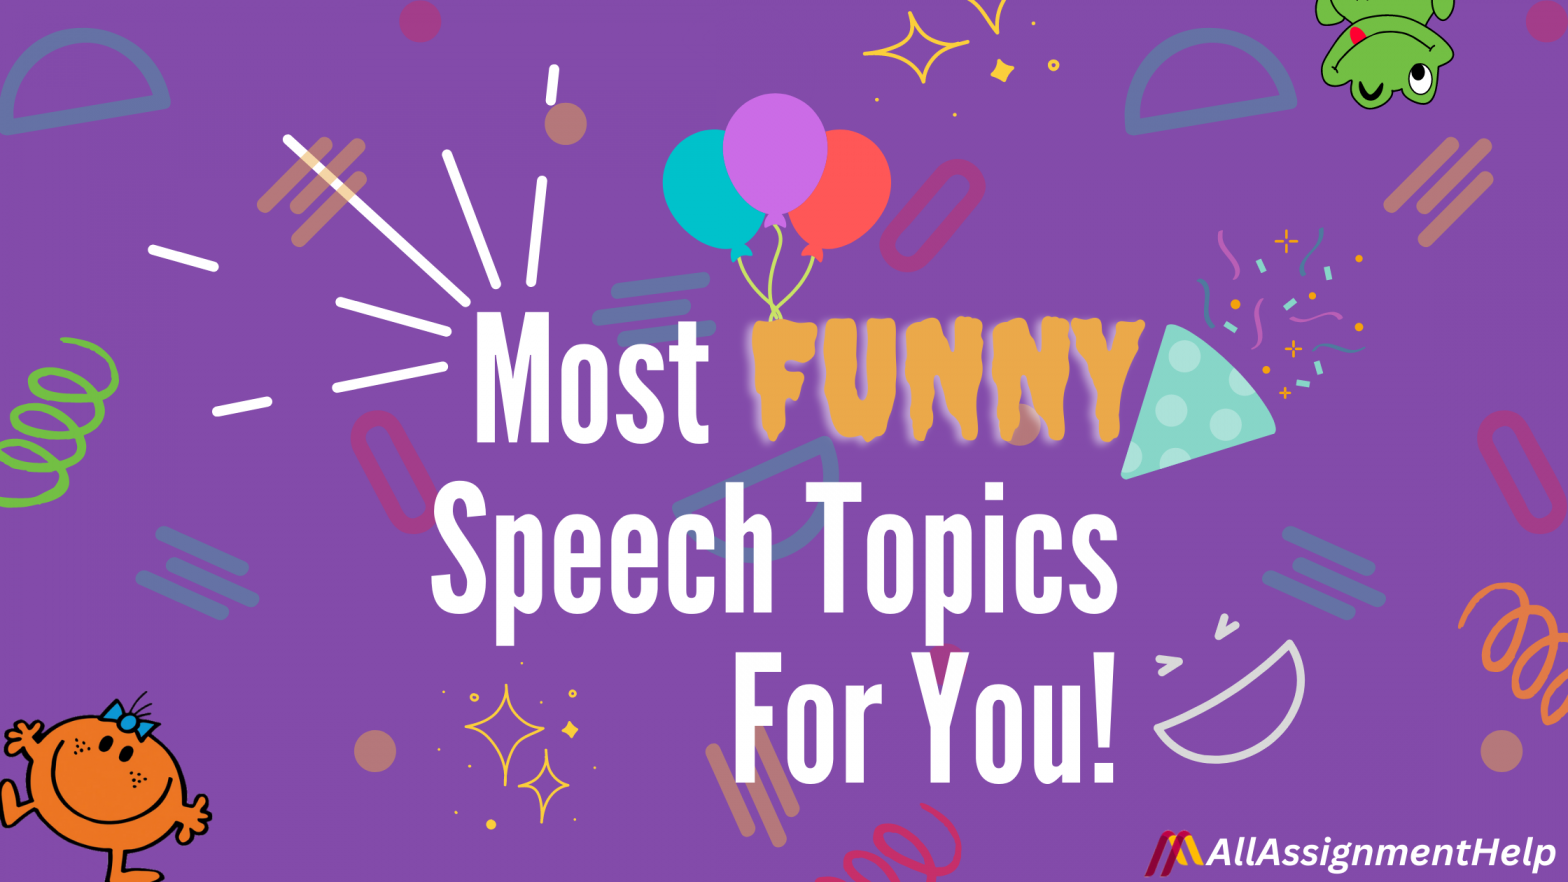 Funny speech topics